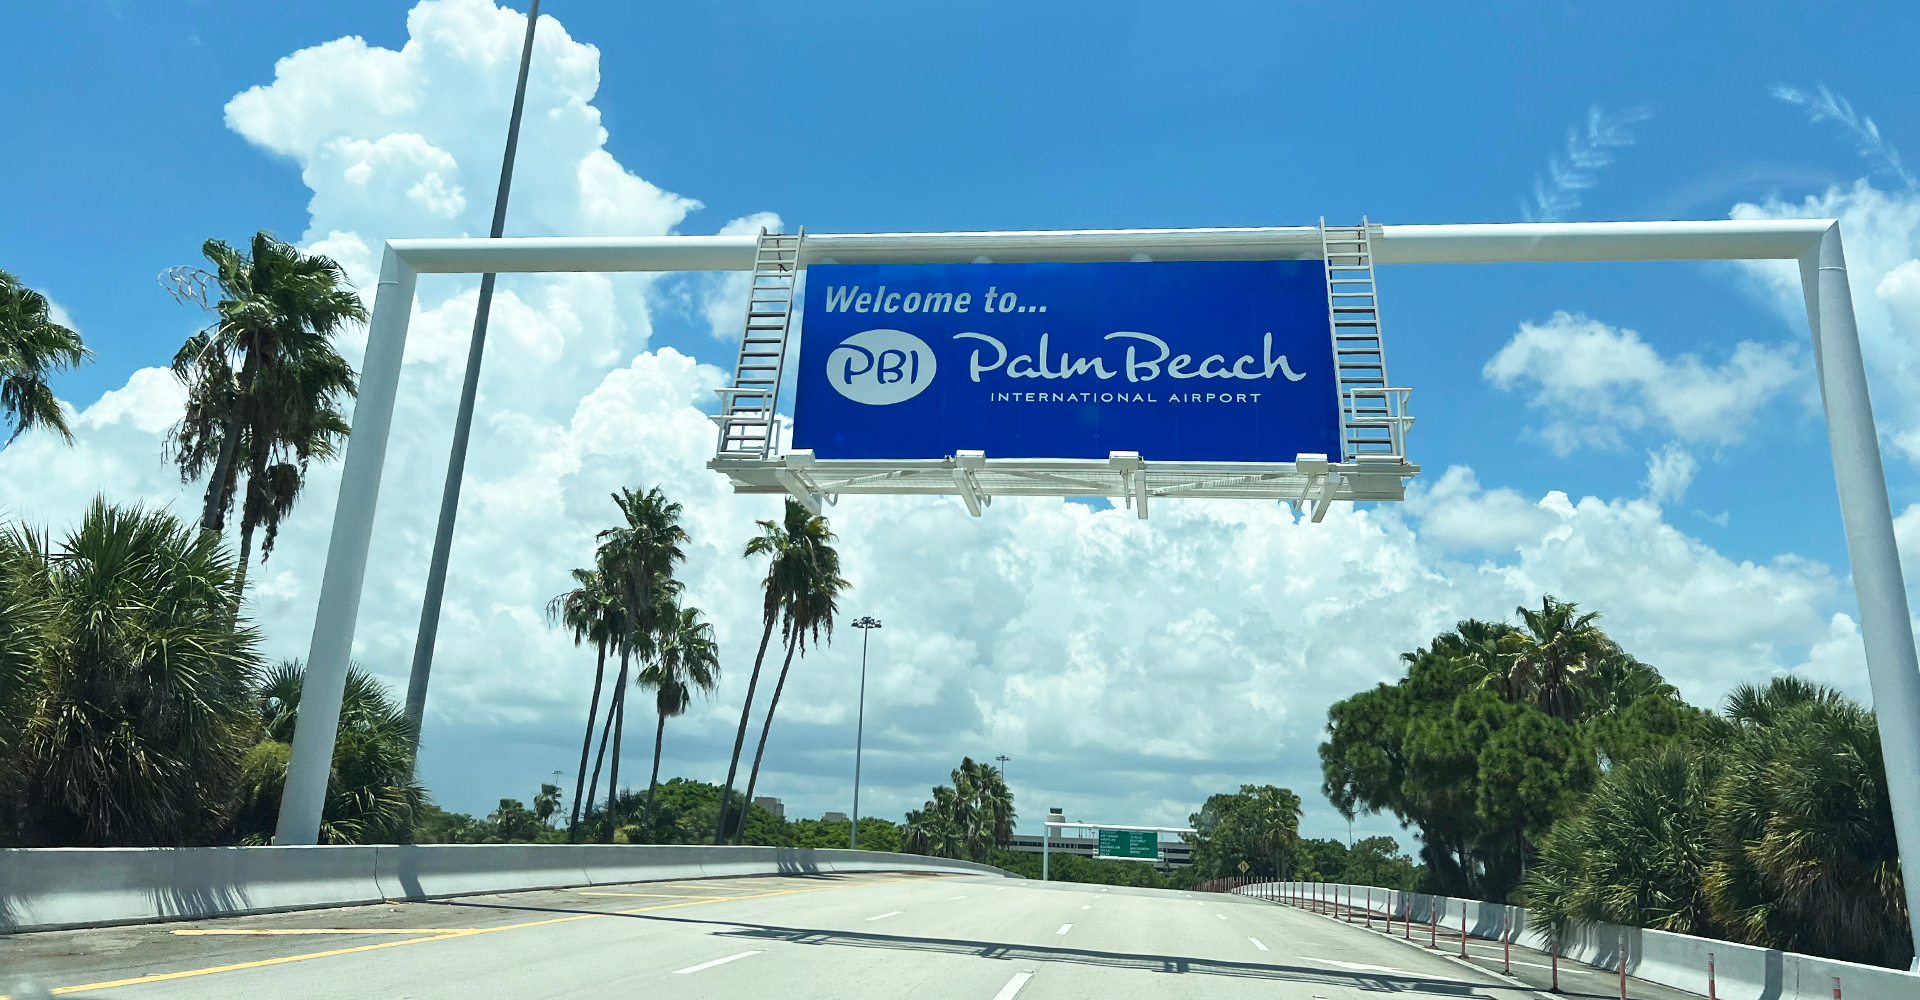 Palm Beach International Airport